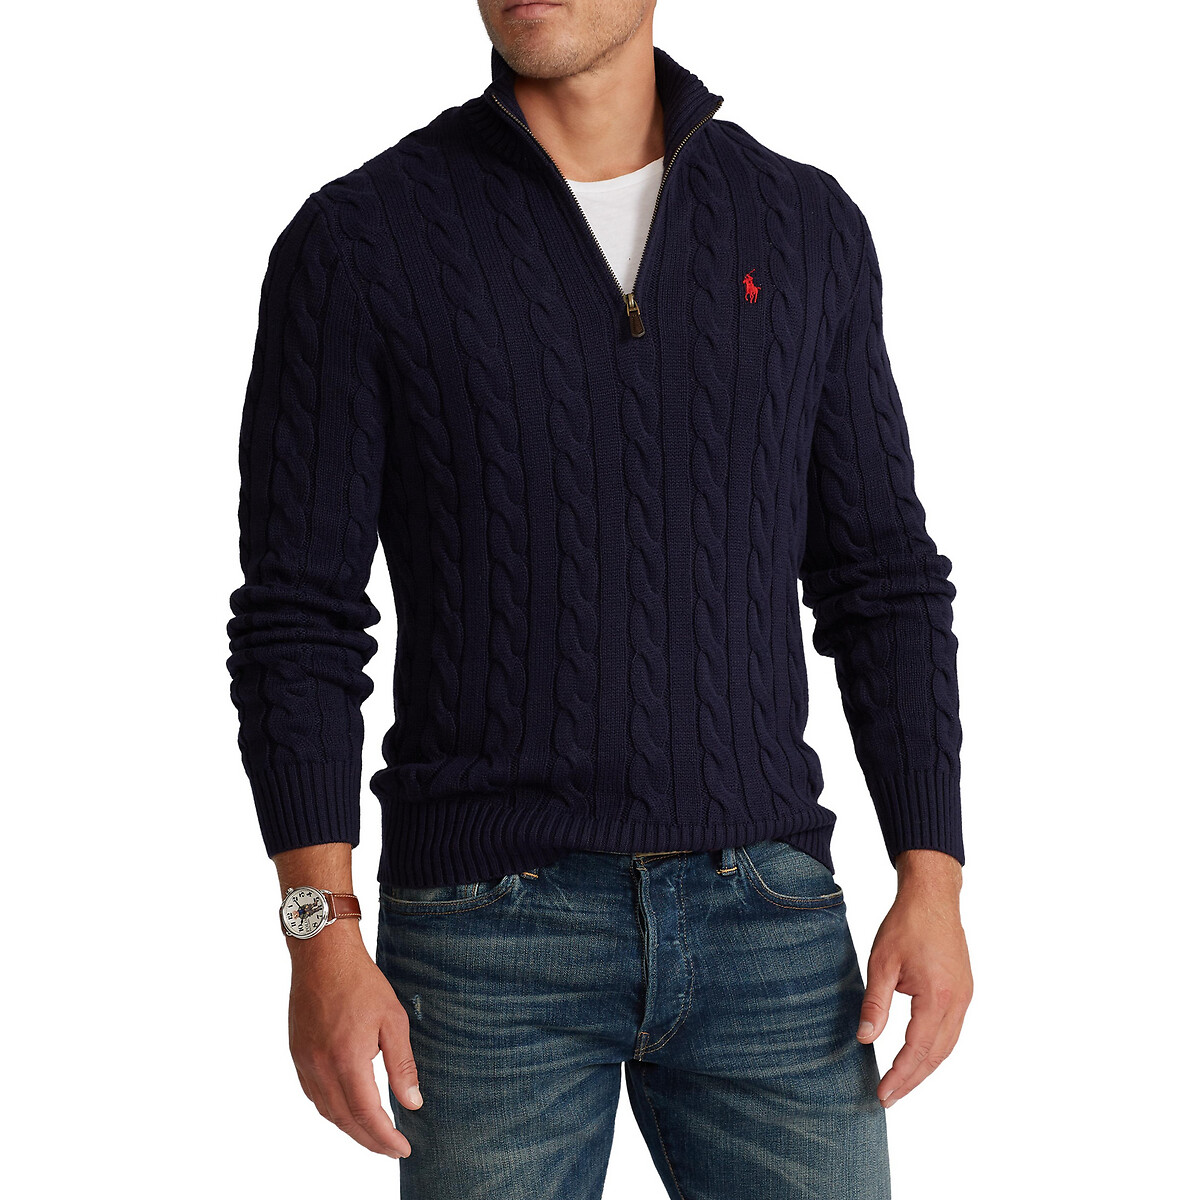 Cotton half-zip jumper in cable knit, navy blue, Polo Ralph Lauren | La ...